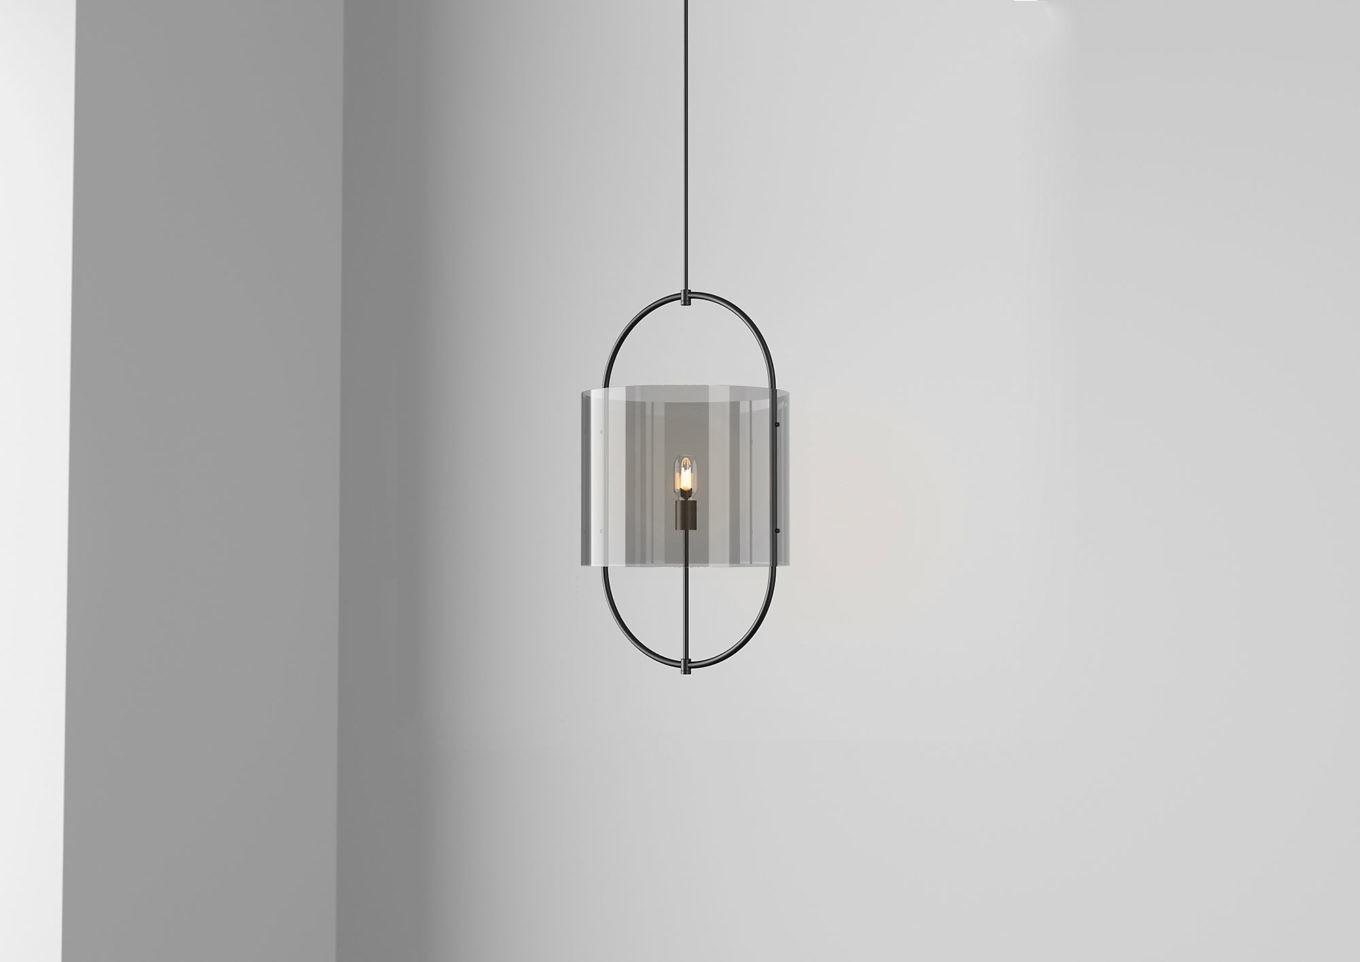 Lantern Lighting Series In the Contemporary Interior Design! 5